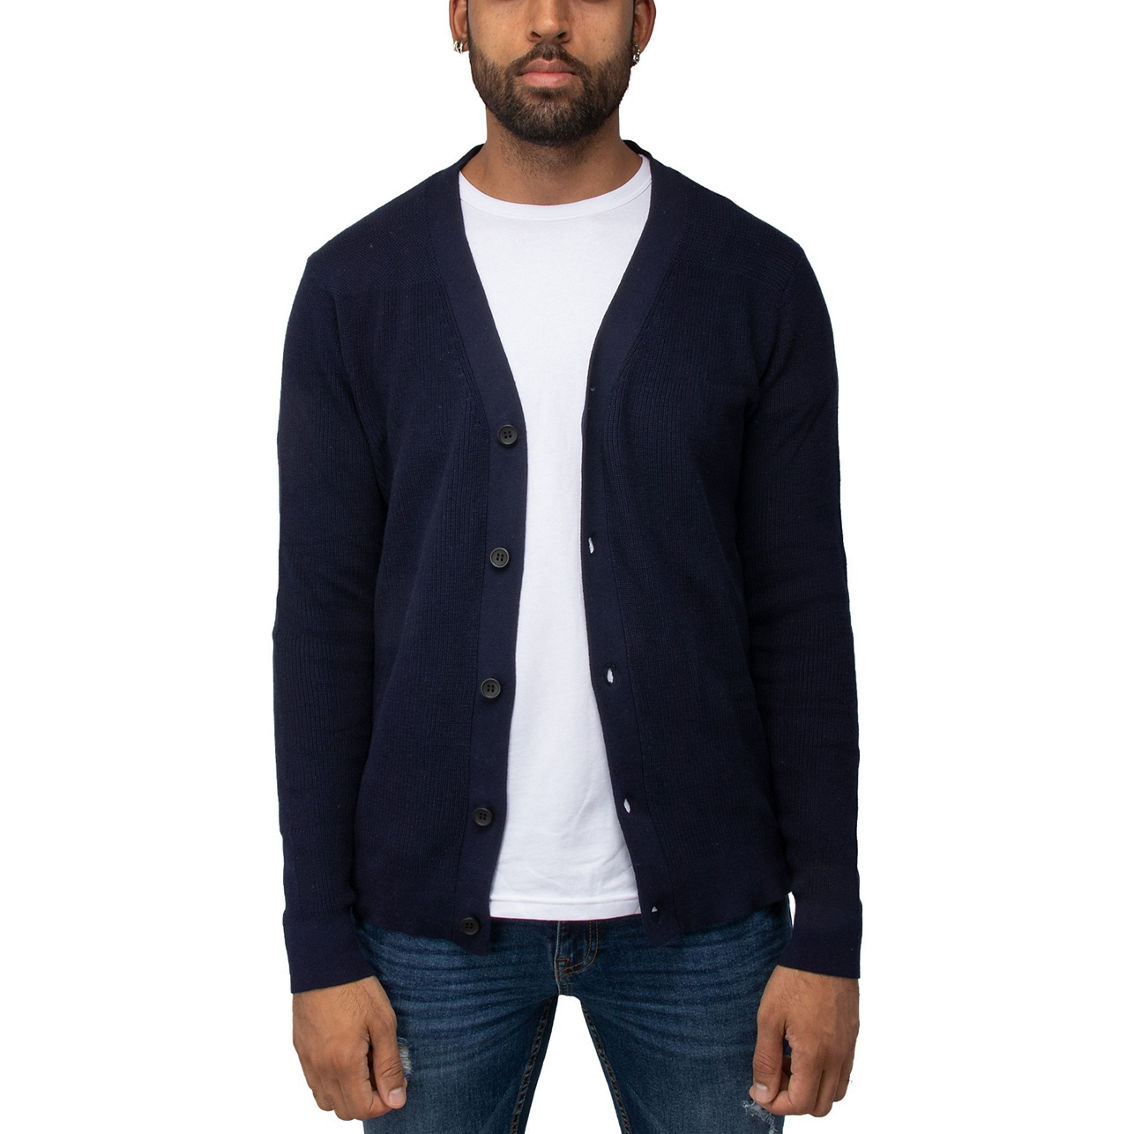 Men's Cotton Cardigan Sweater - Image 3 of 3